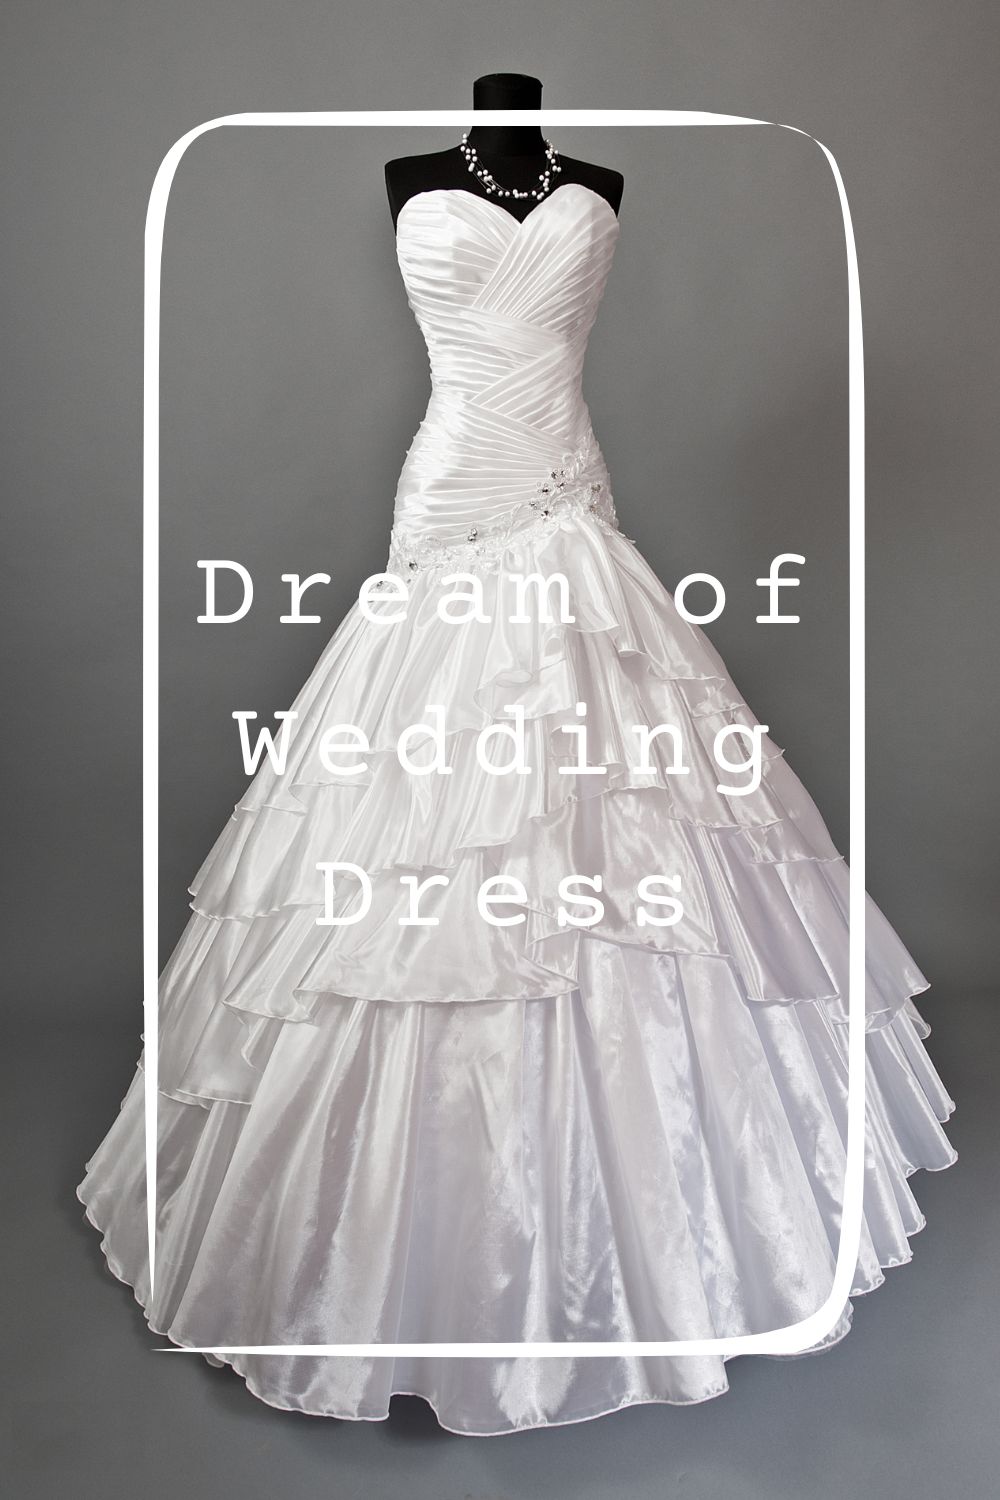 Dream of Wedding Dress1